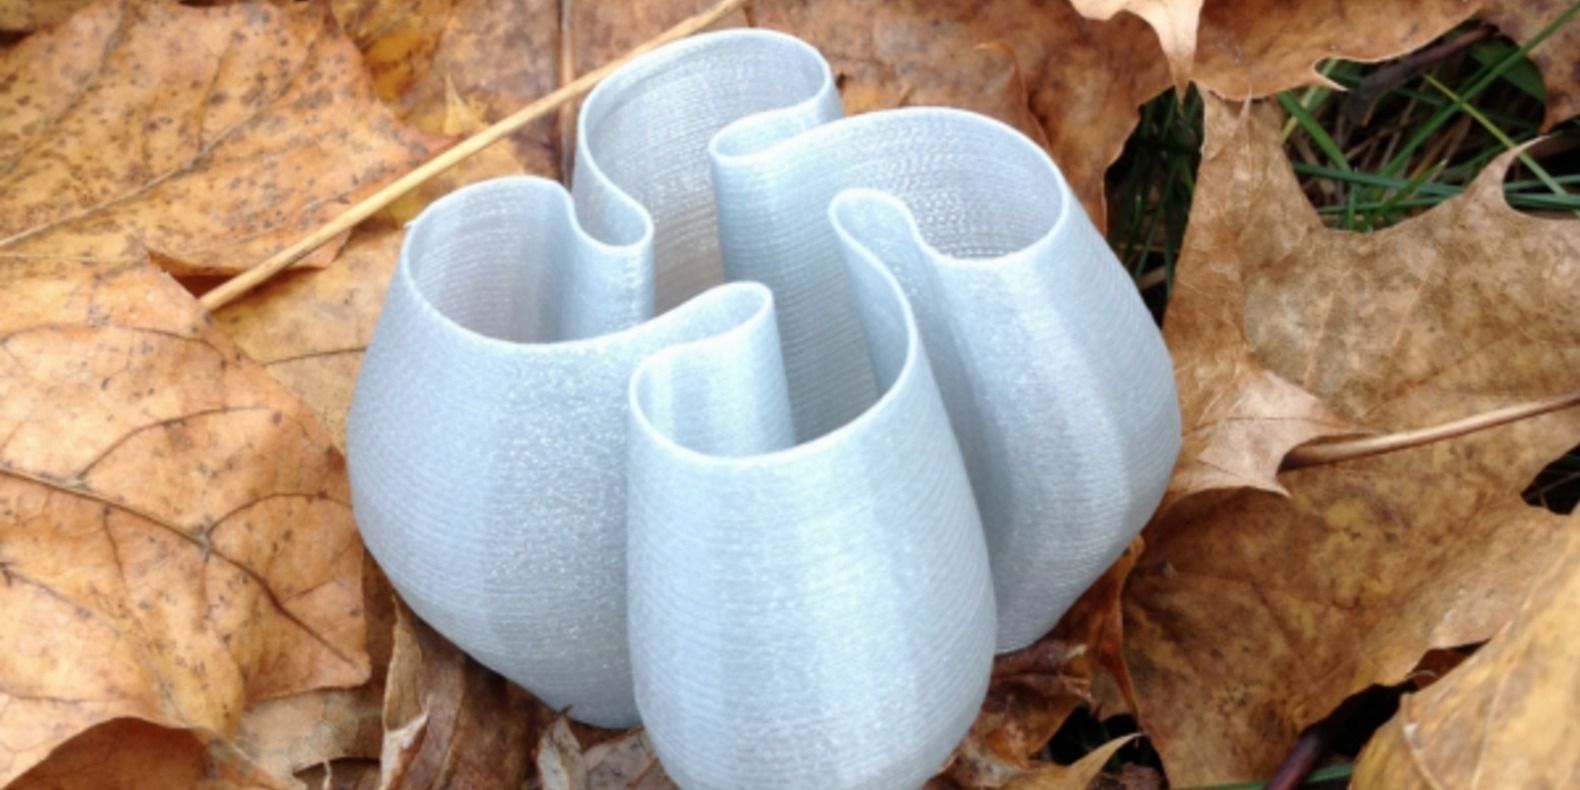 Vasen aus dem 3D-Drucker